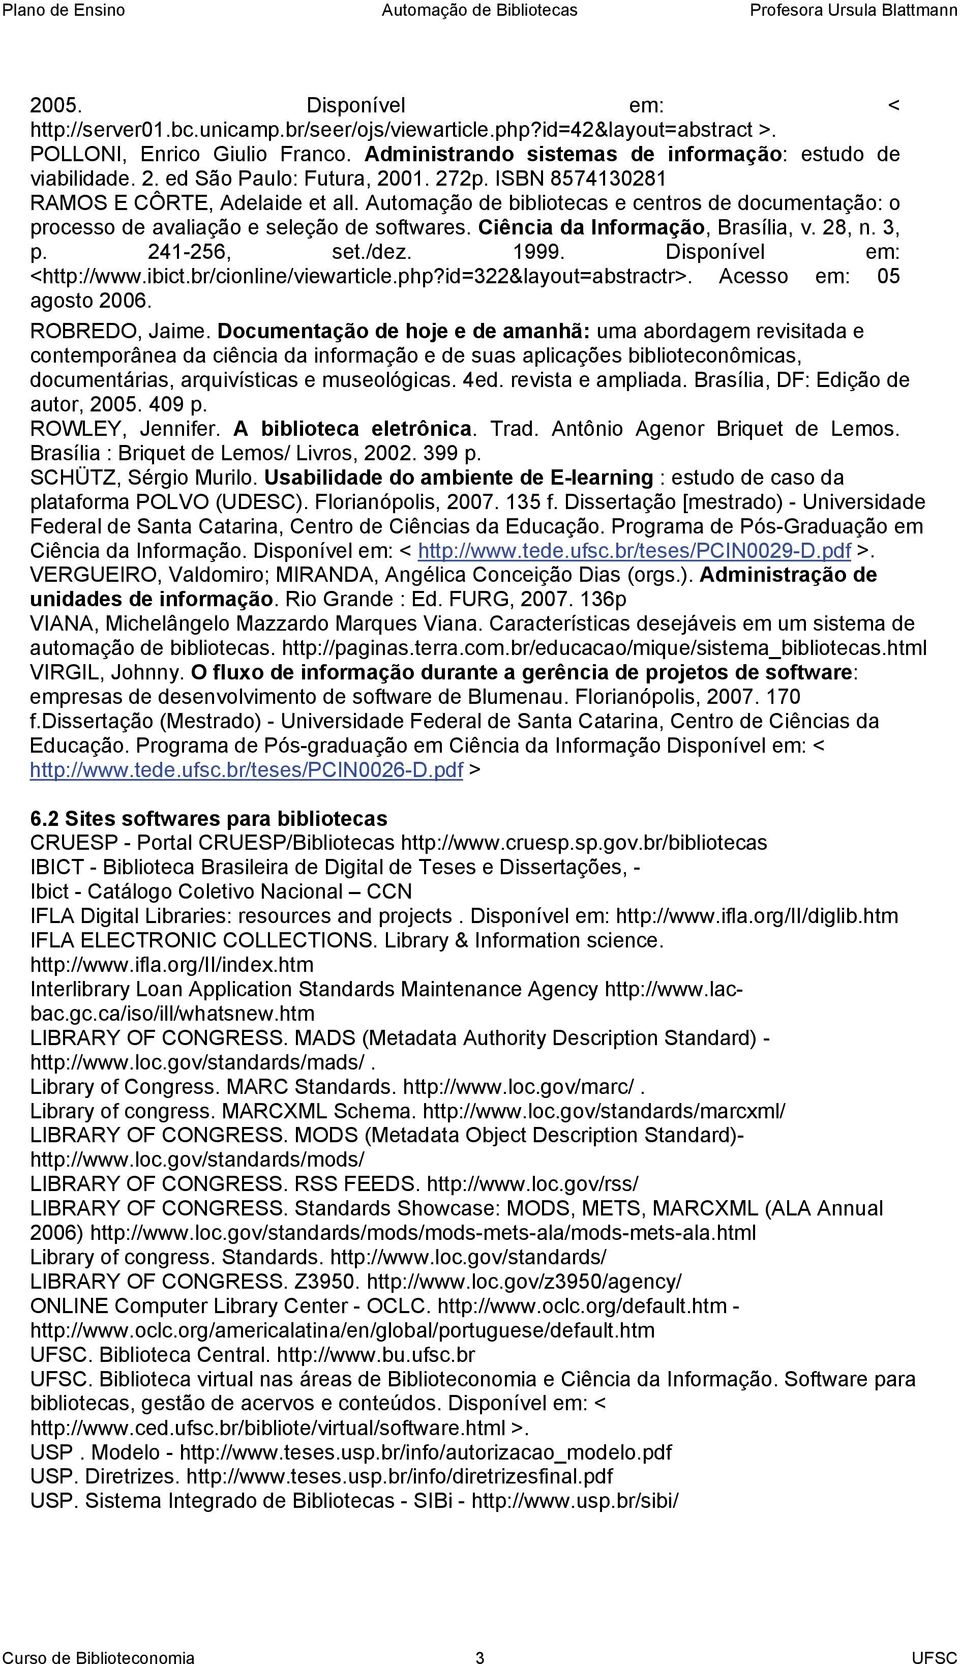 Ciência da Informação, Brasília, v. 28, n. 3, p. 241-256, set./dez. 1999. Disponível em: <http://www.ibict.br/cionline/viewarticle.php?id=322&layout=abstractr>. Acesso em: 05 agosto 2006.